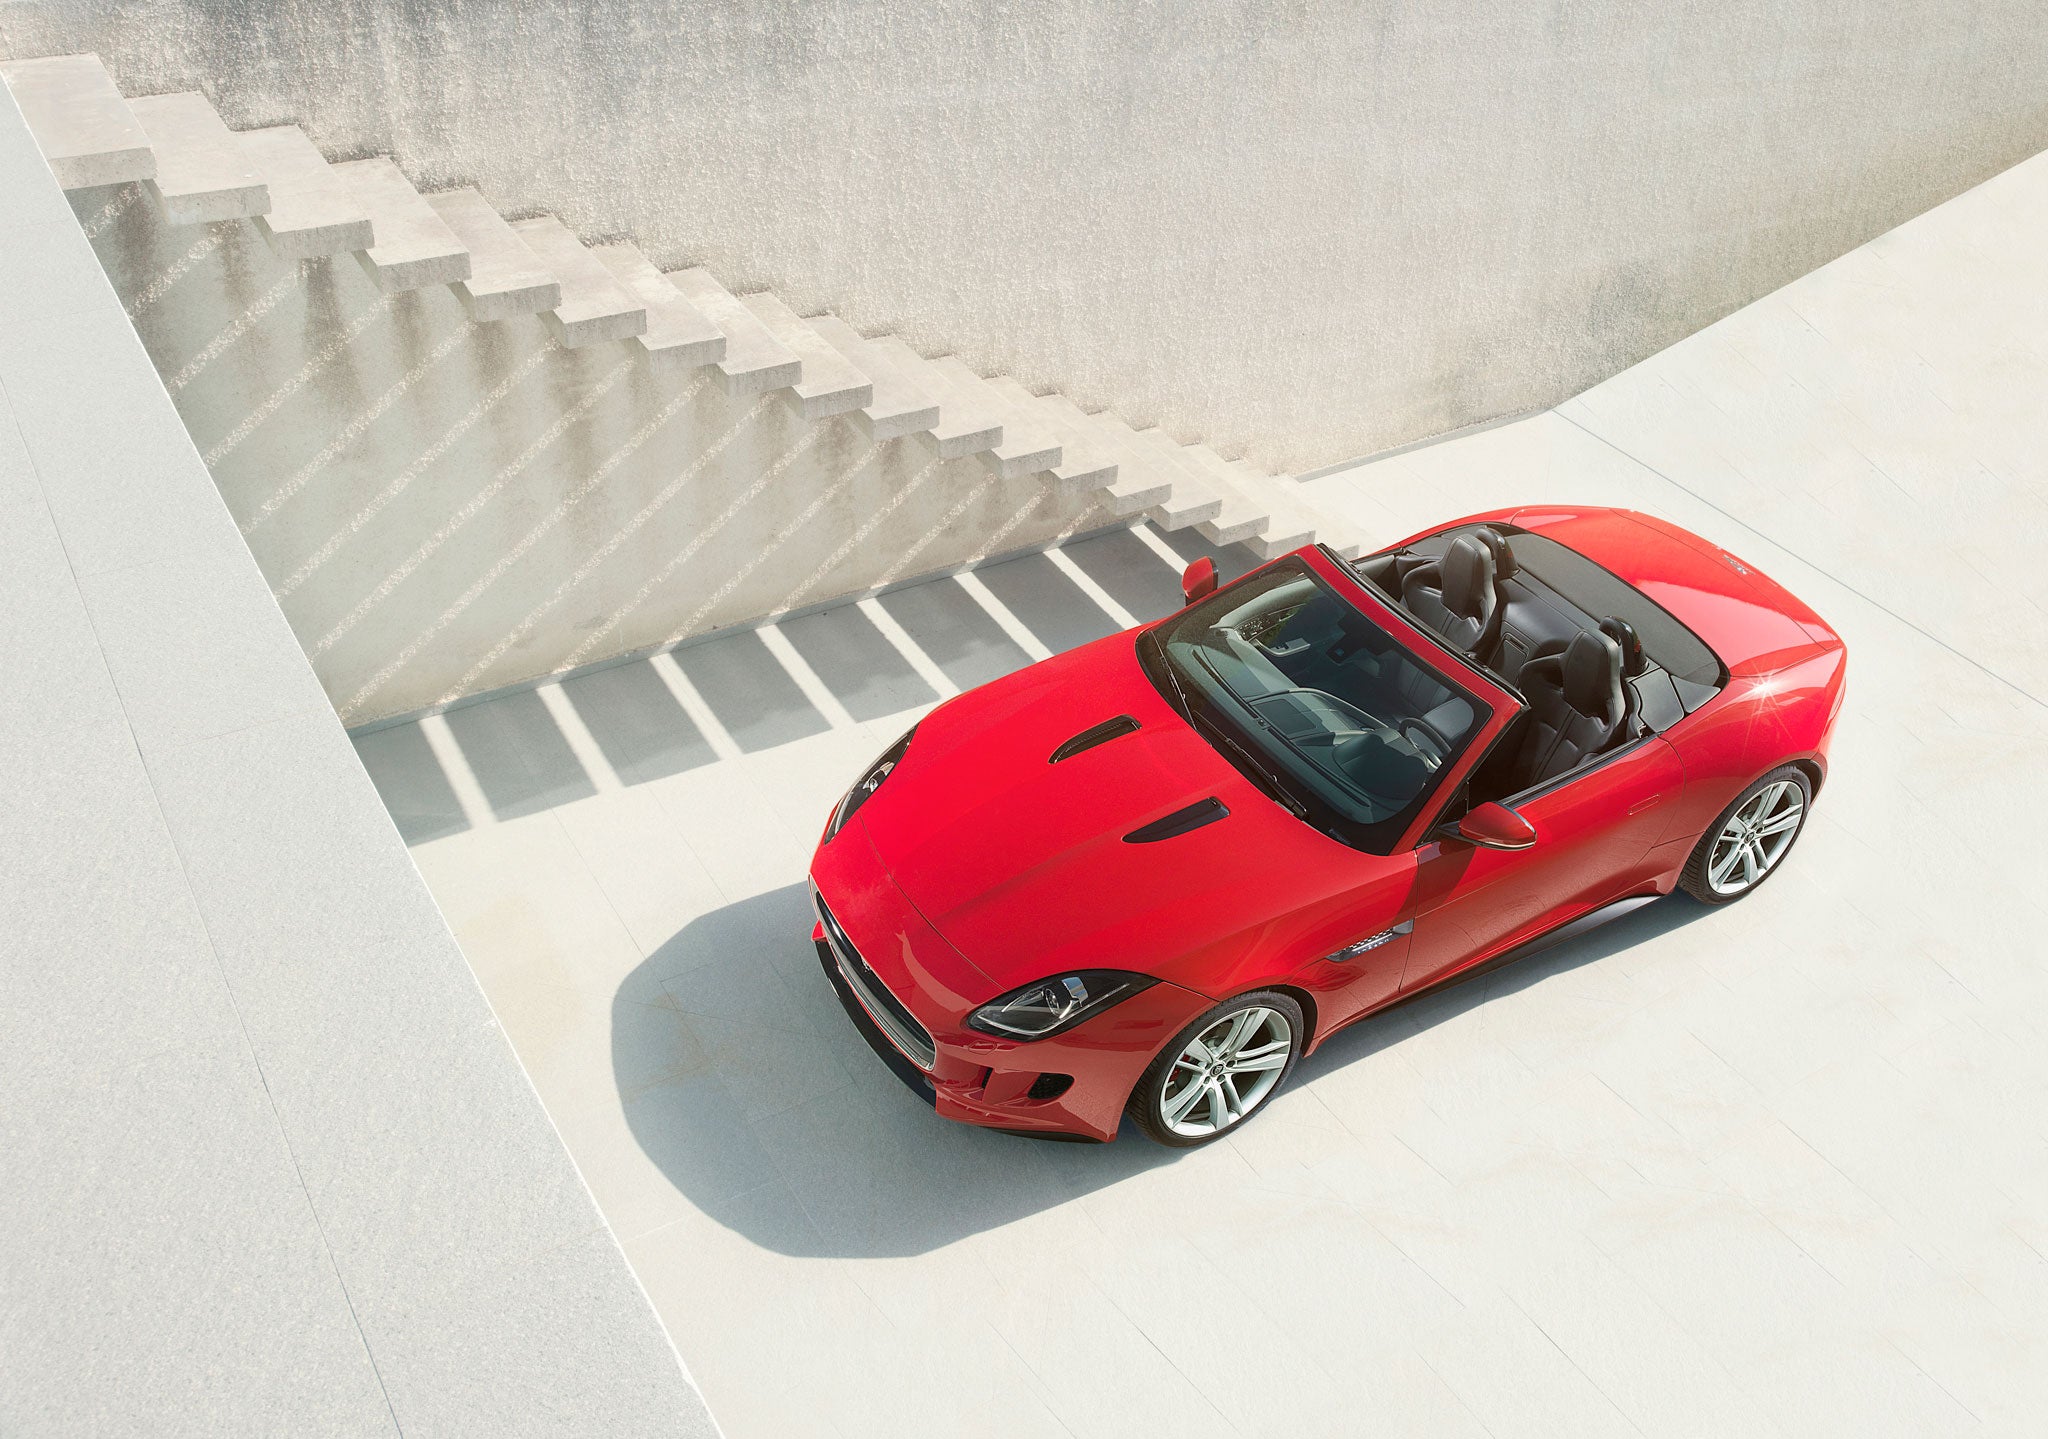 Worth the wait: The Jaguar F-Type V6 S